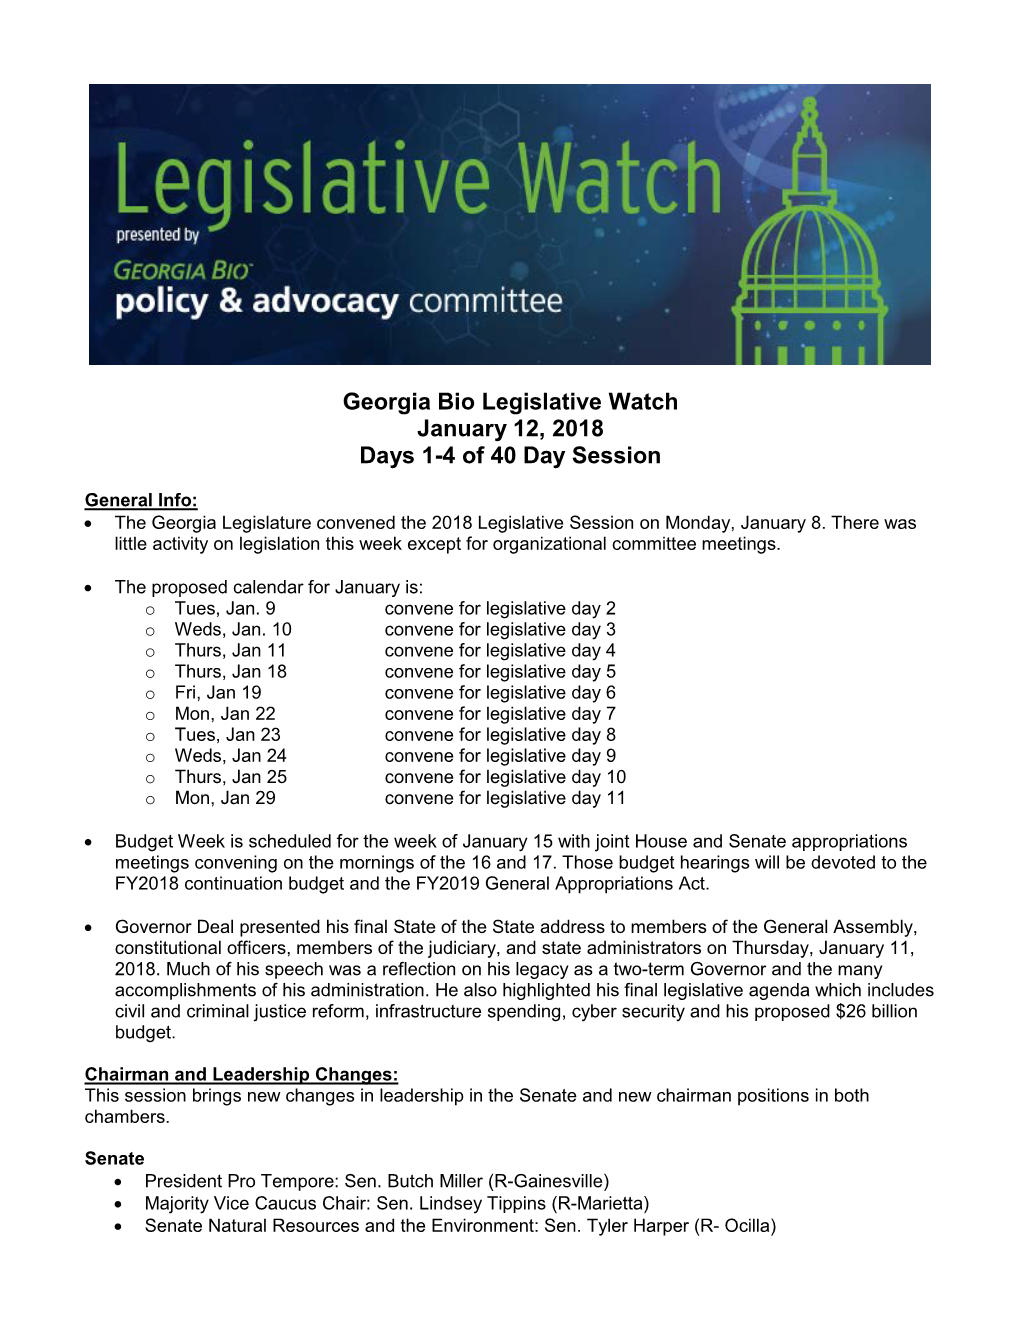 Georgia Bio Legislative Watch January 12, 2018 Days 1-4 of 40 Day Session